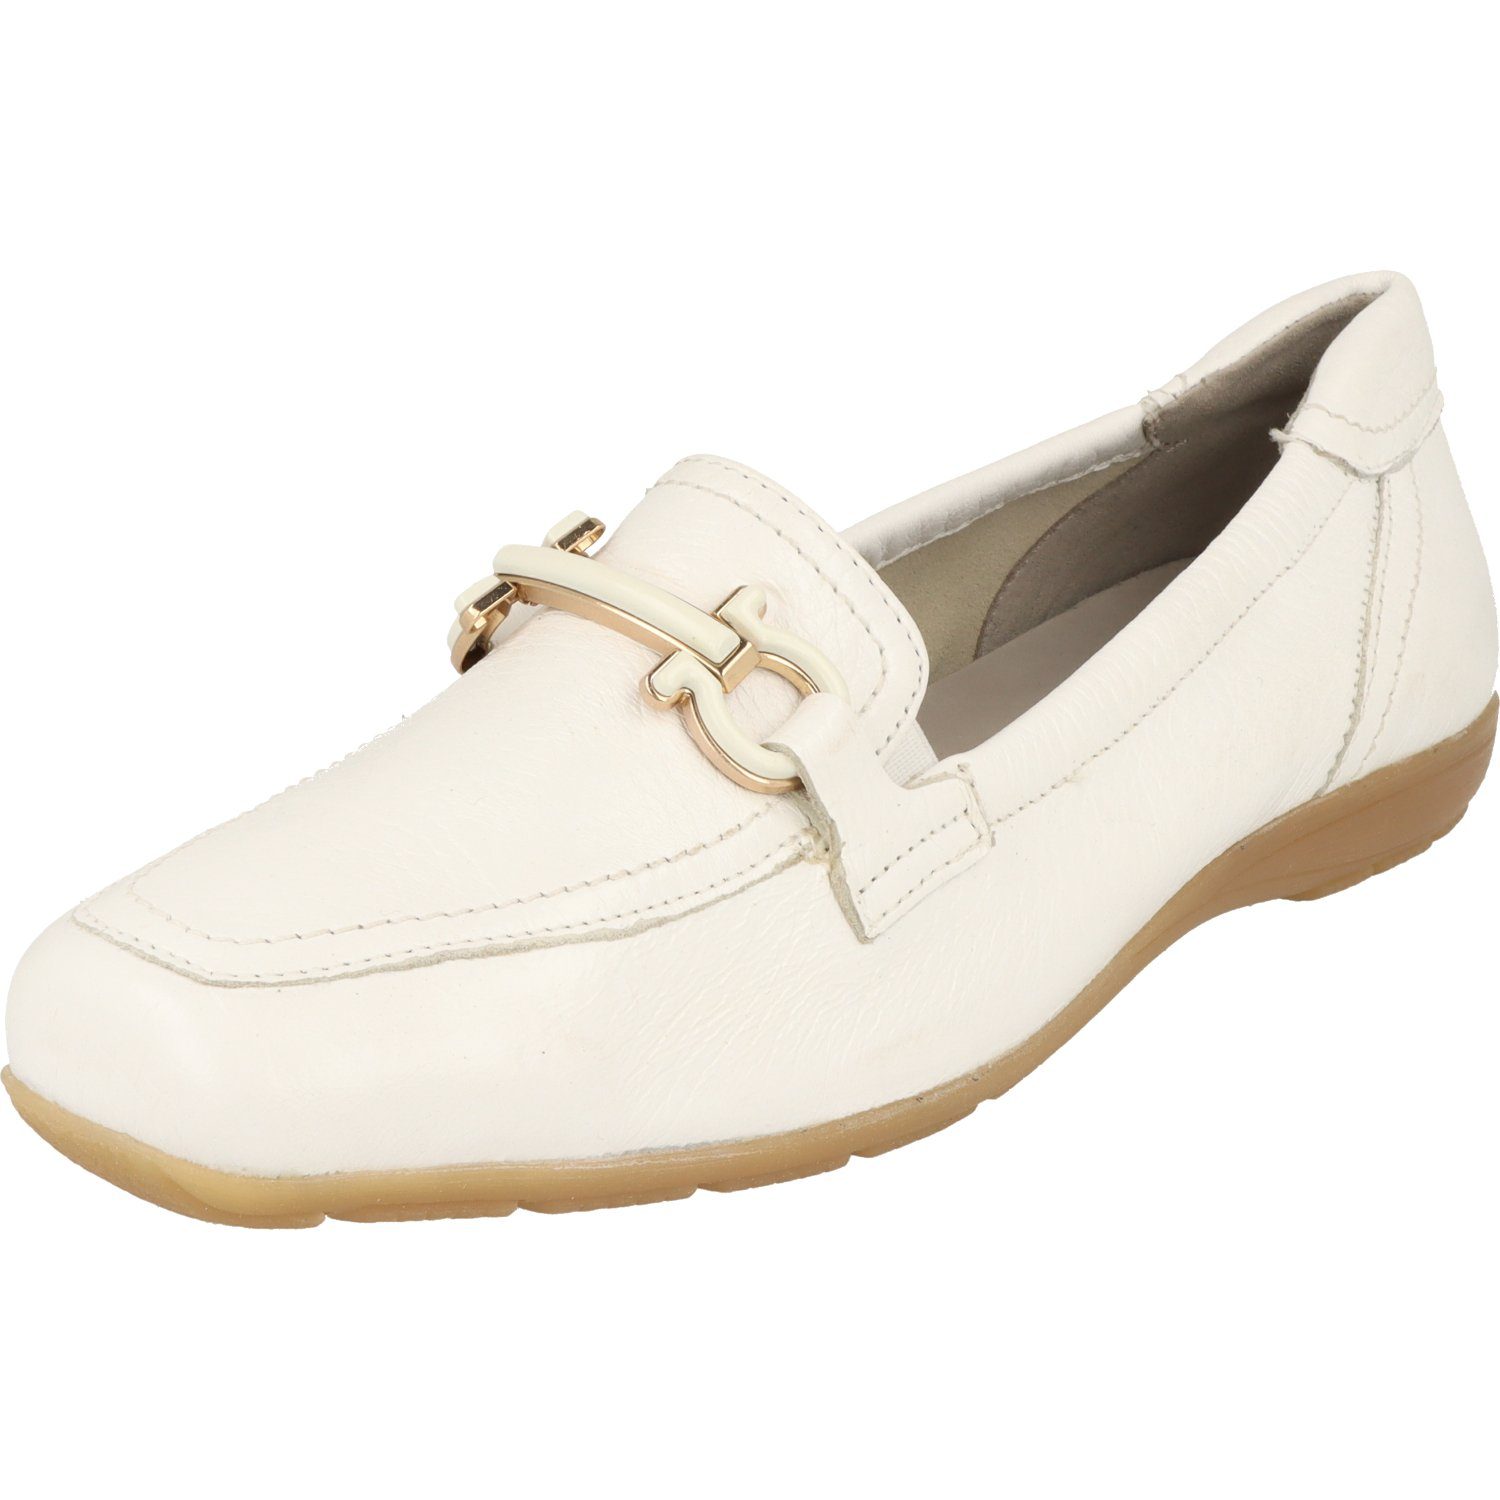 Caprice Comfort 9-24654-20 Damen Schuhe stylische Leder Slipper 105 White Slipper